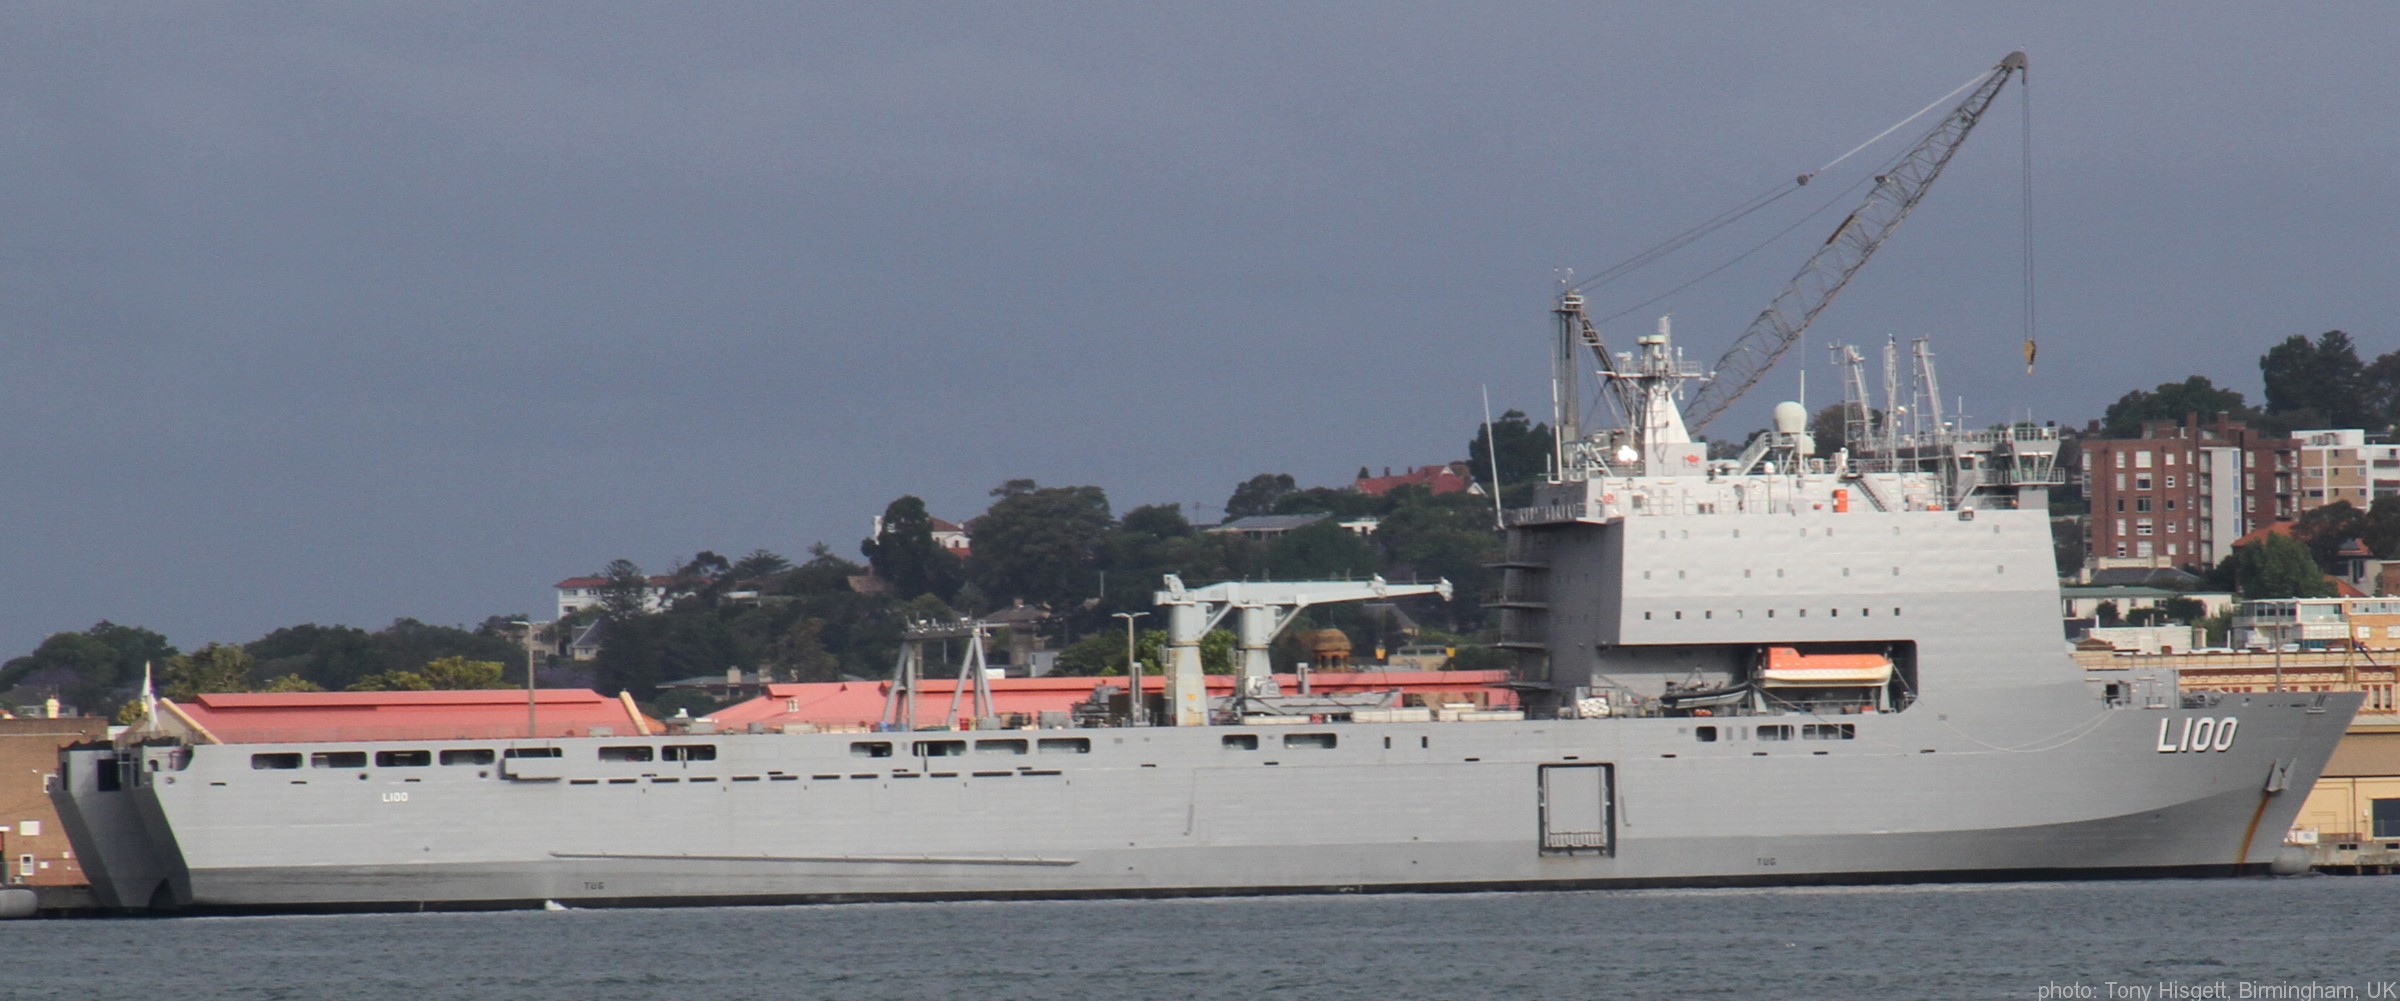 l-100 hmas choules amphibious landing ship dock lsd bay class rfa royal australian navy 02